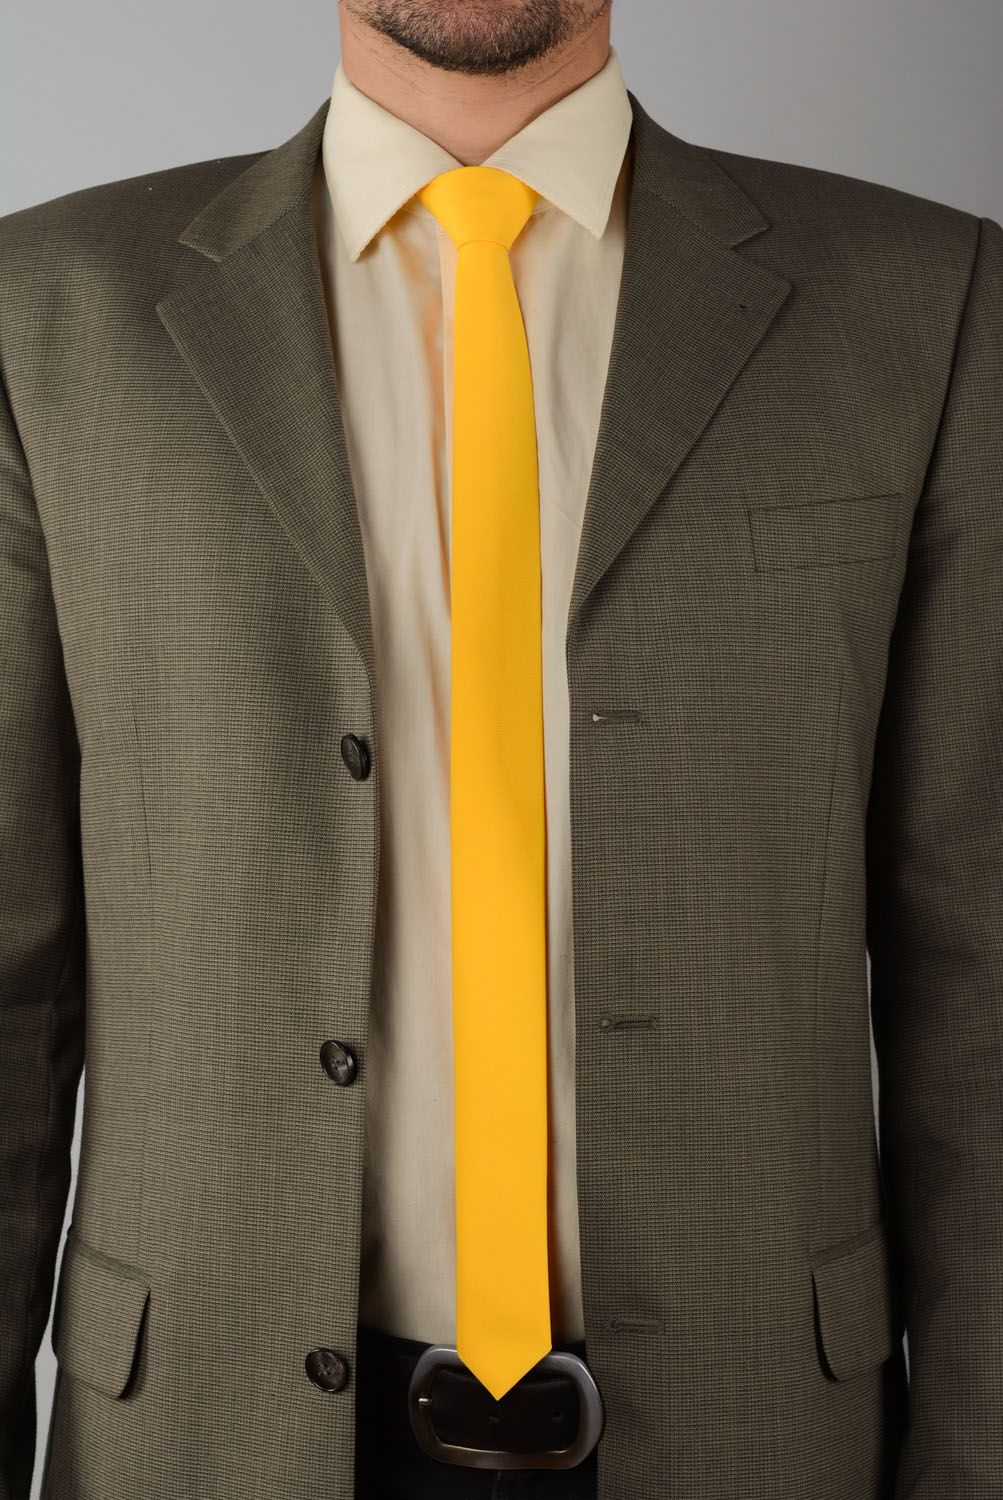 Corbata amarilla de gabardina foto 1